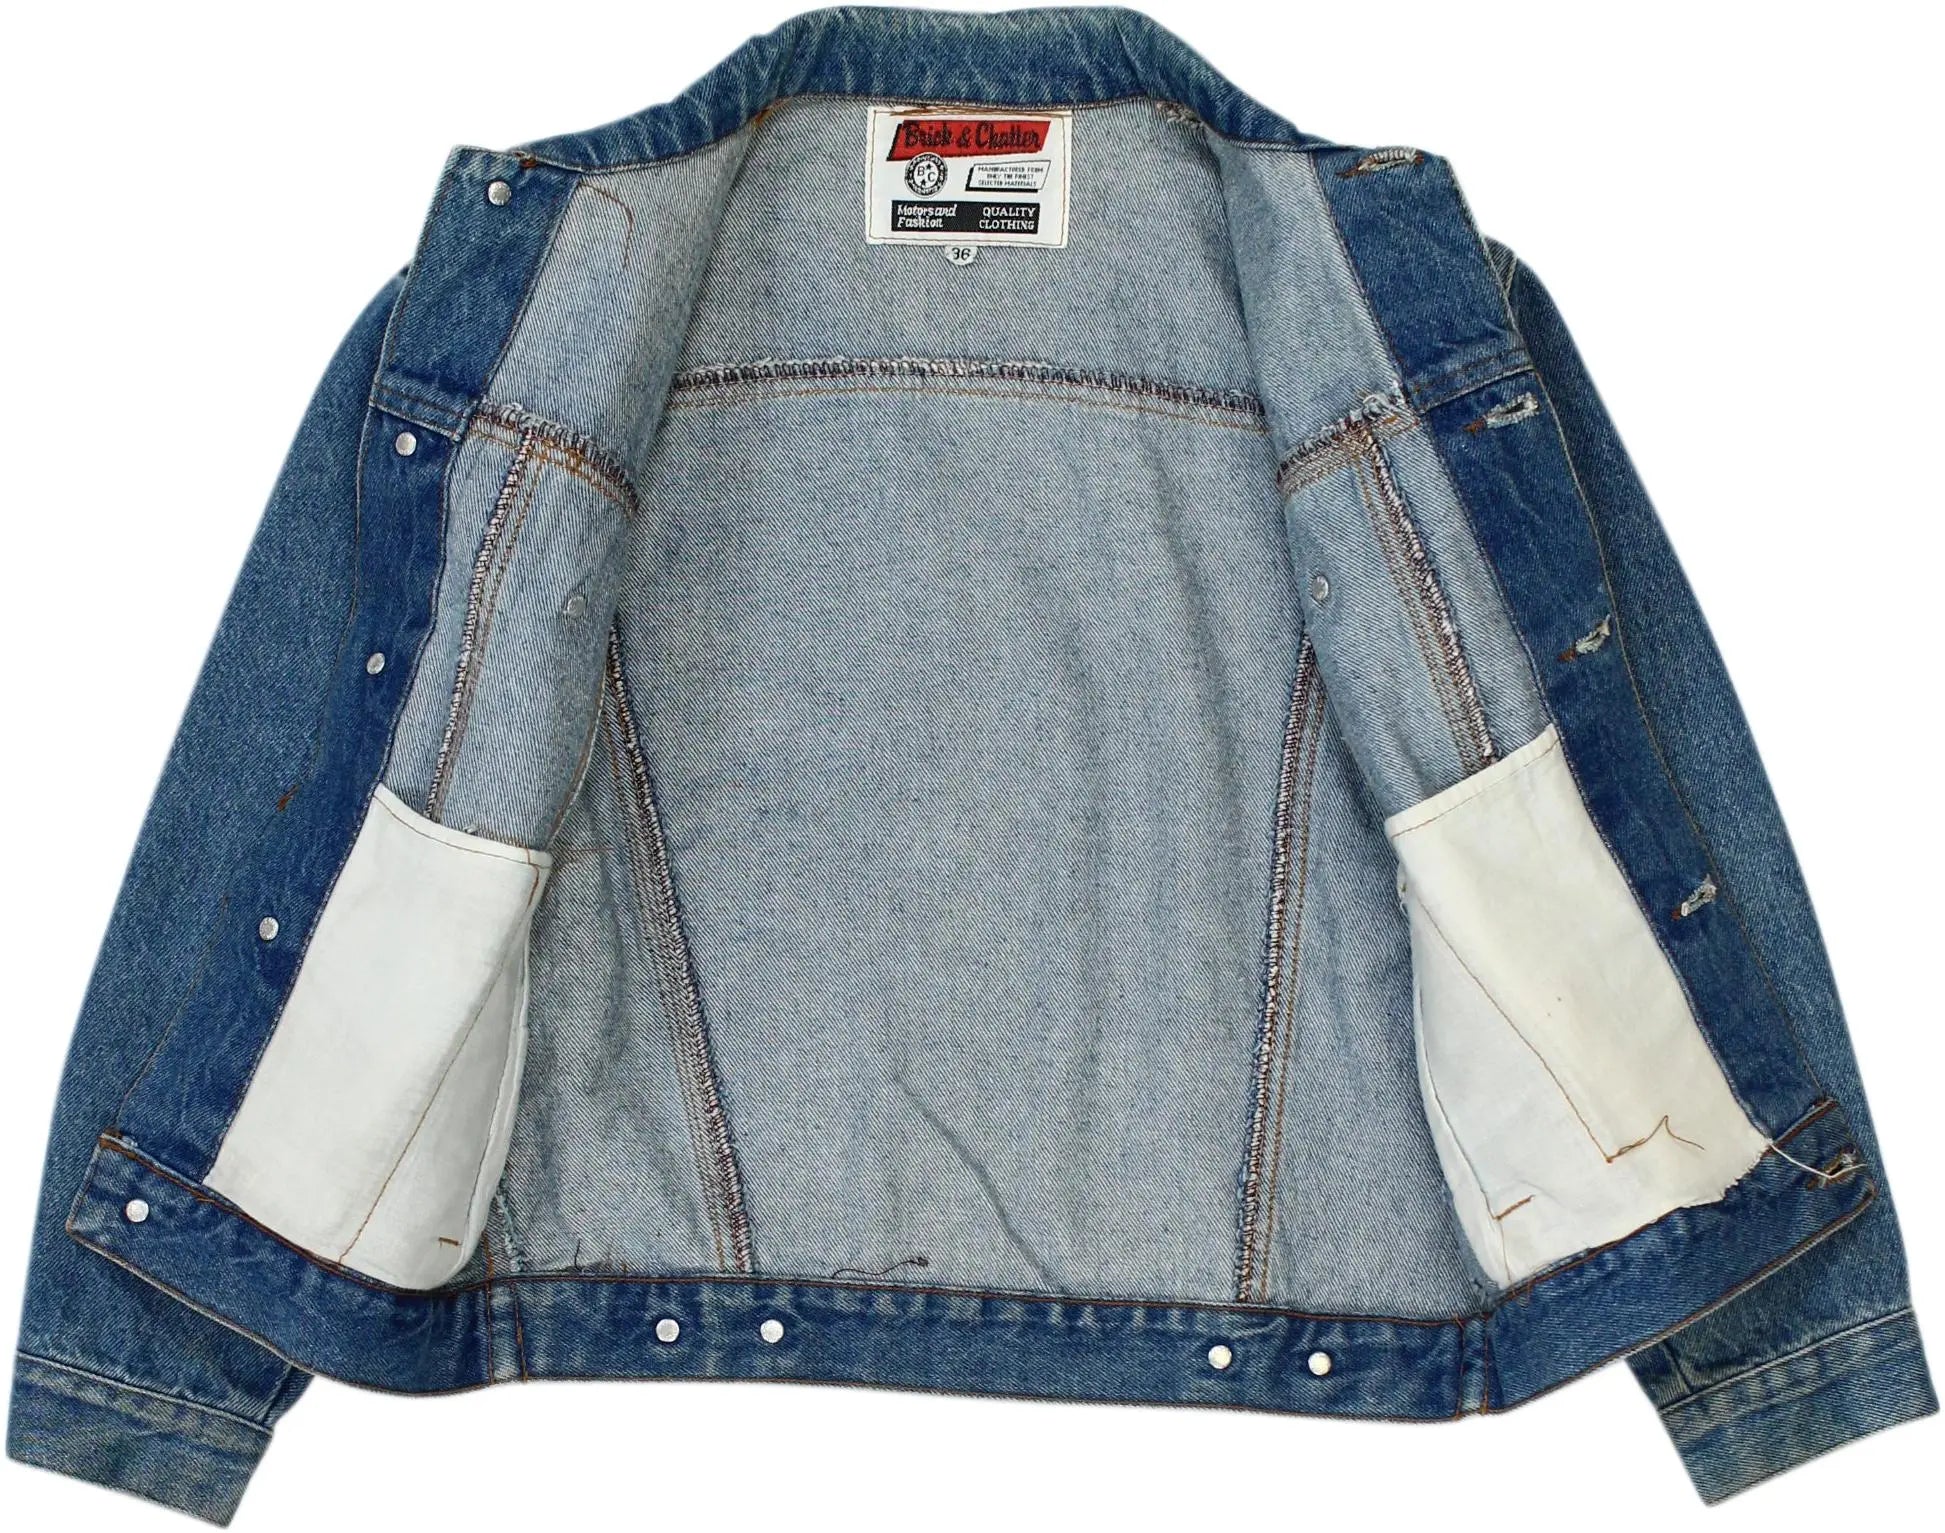 Brick & Chatter - Blue Denim Jacket- ThriftTale.com - Vintage and second handclothing